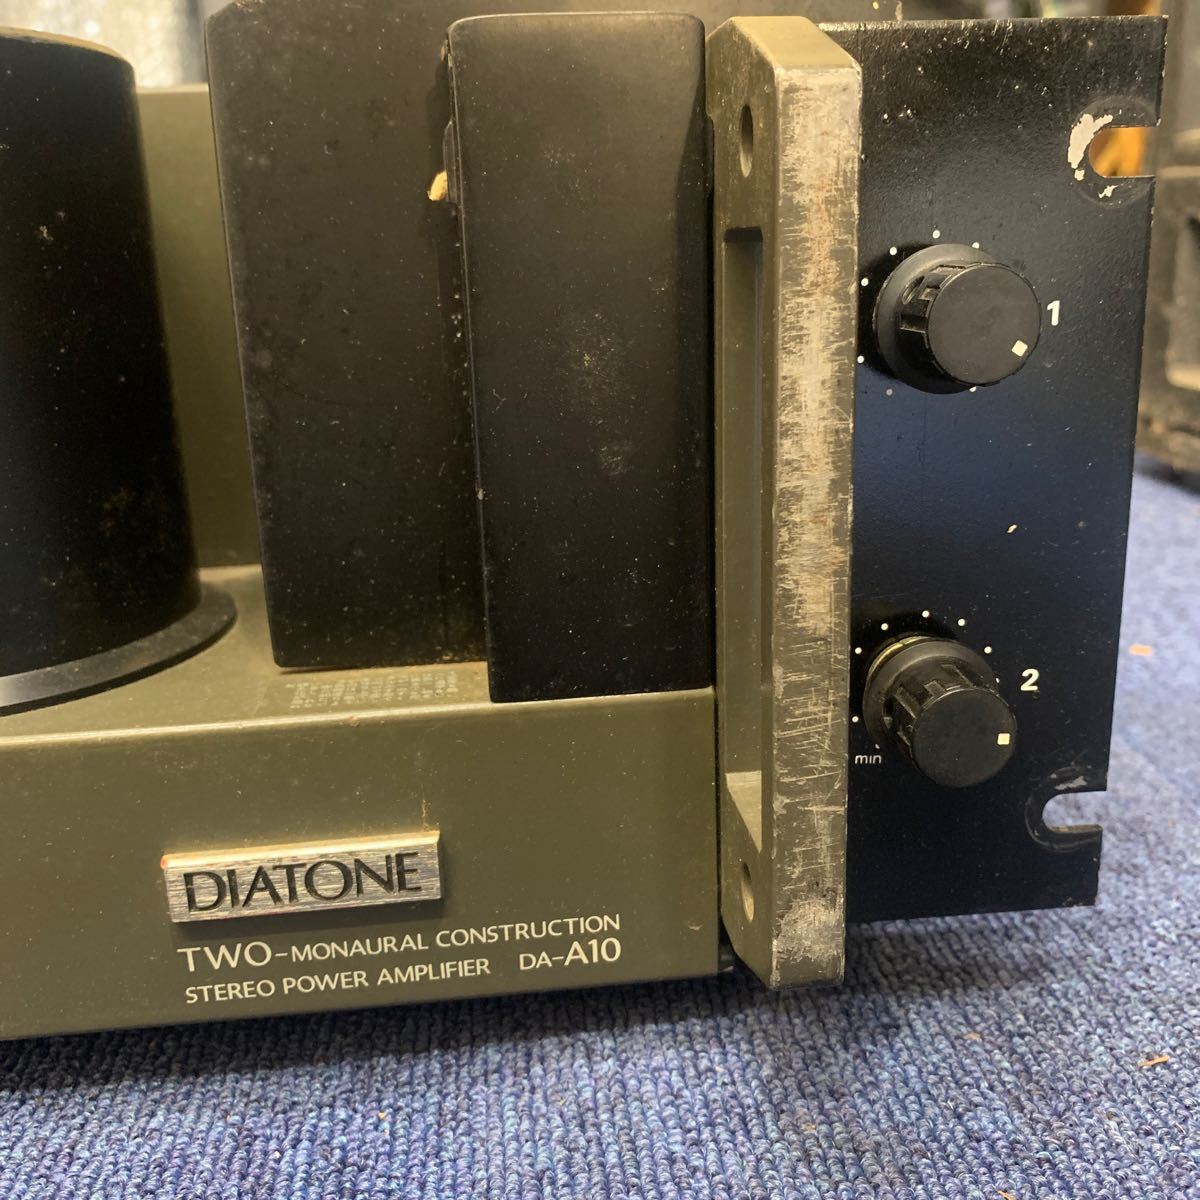 DIATONE Diatone DA-A10 STEREO POWER AMPLIFIER stereo power amplifier 